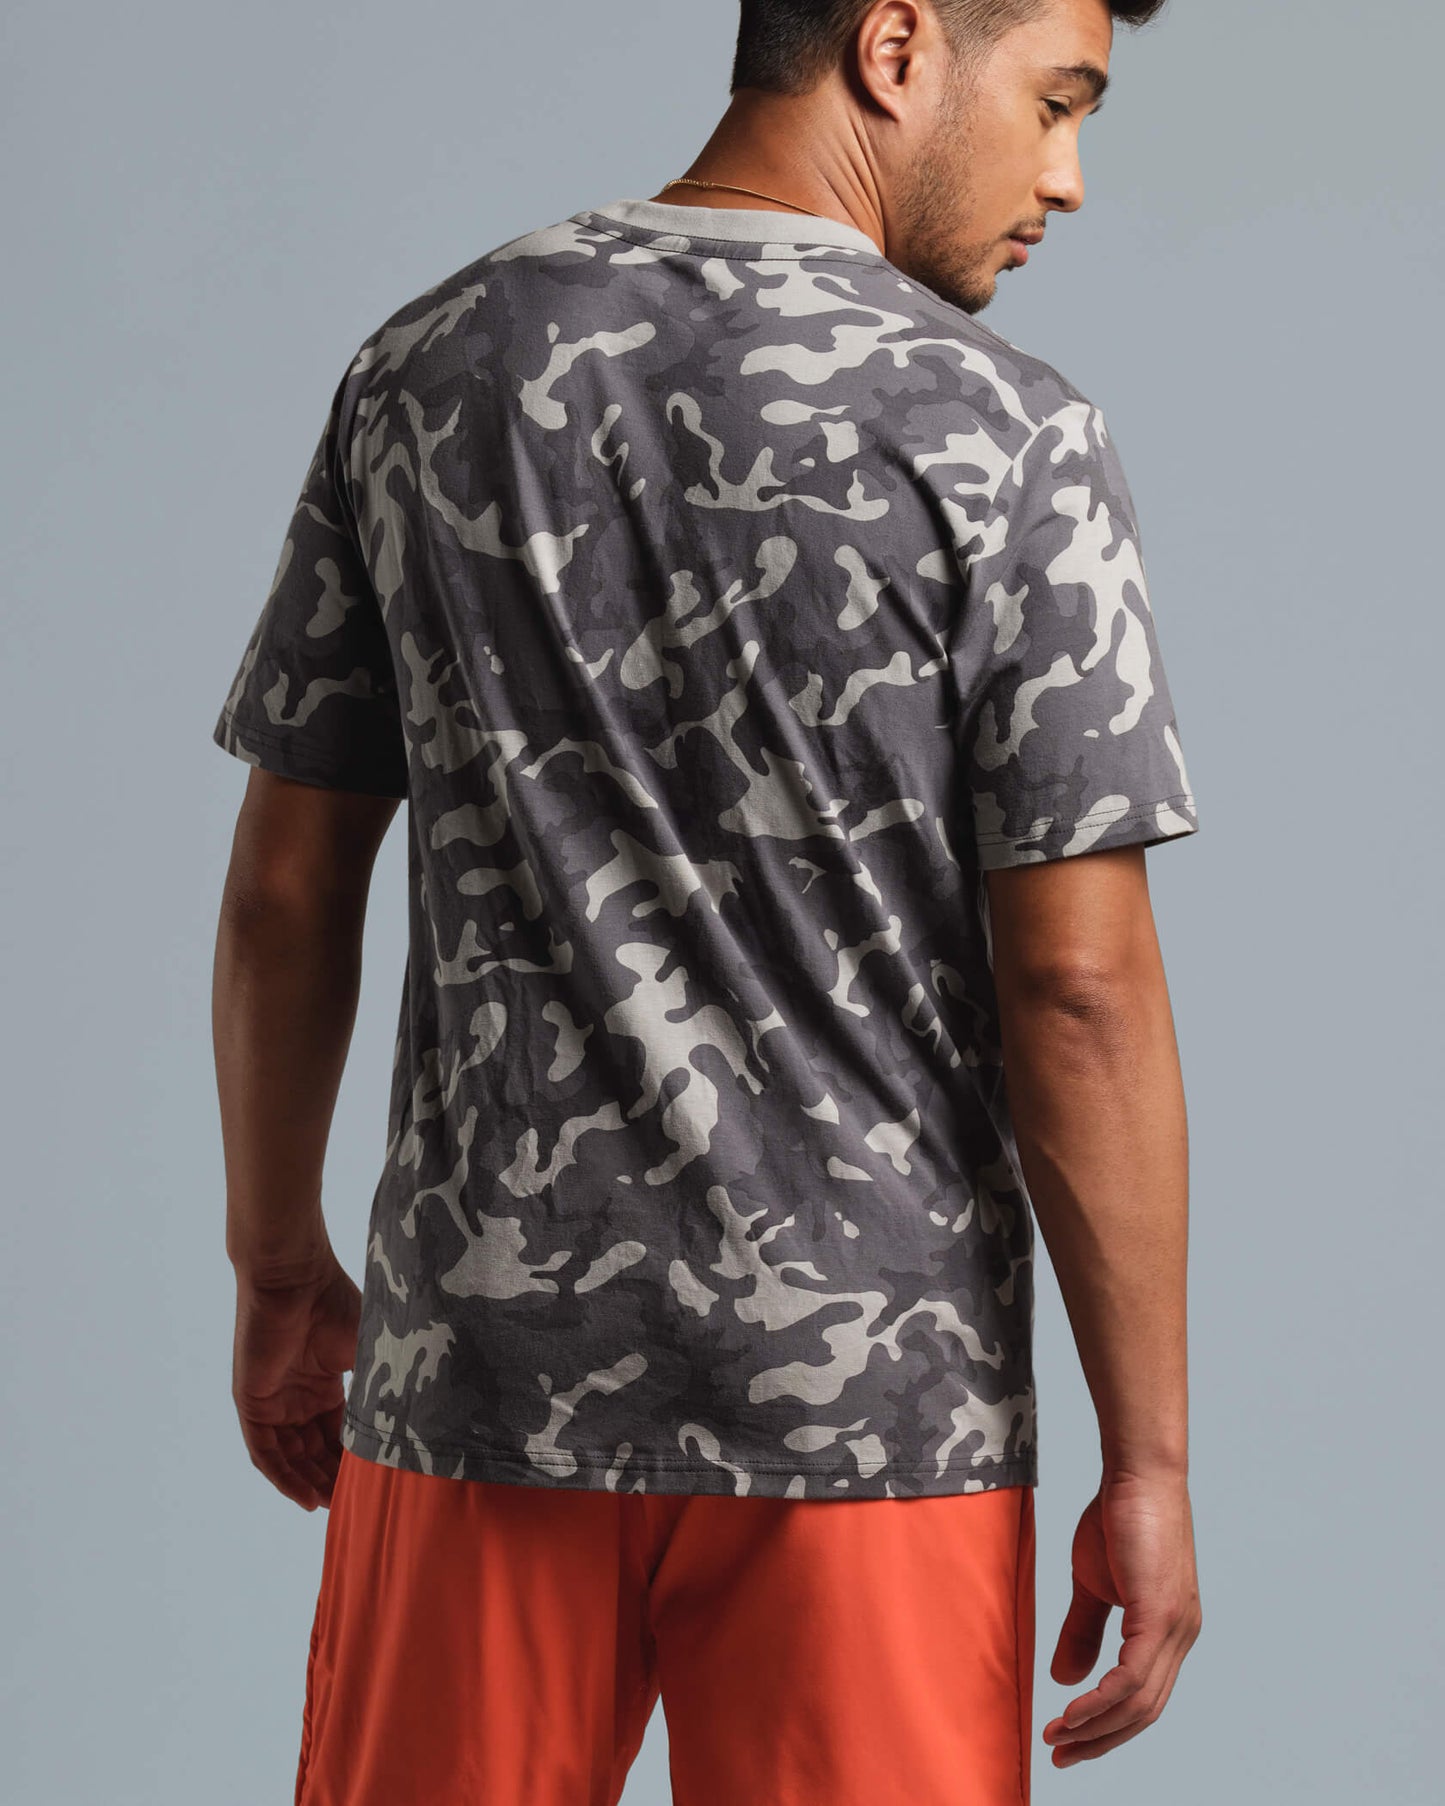 Enduro Stretch T-Shirt |Charcoal Camo| detail